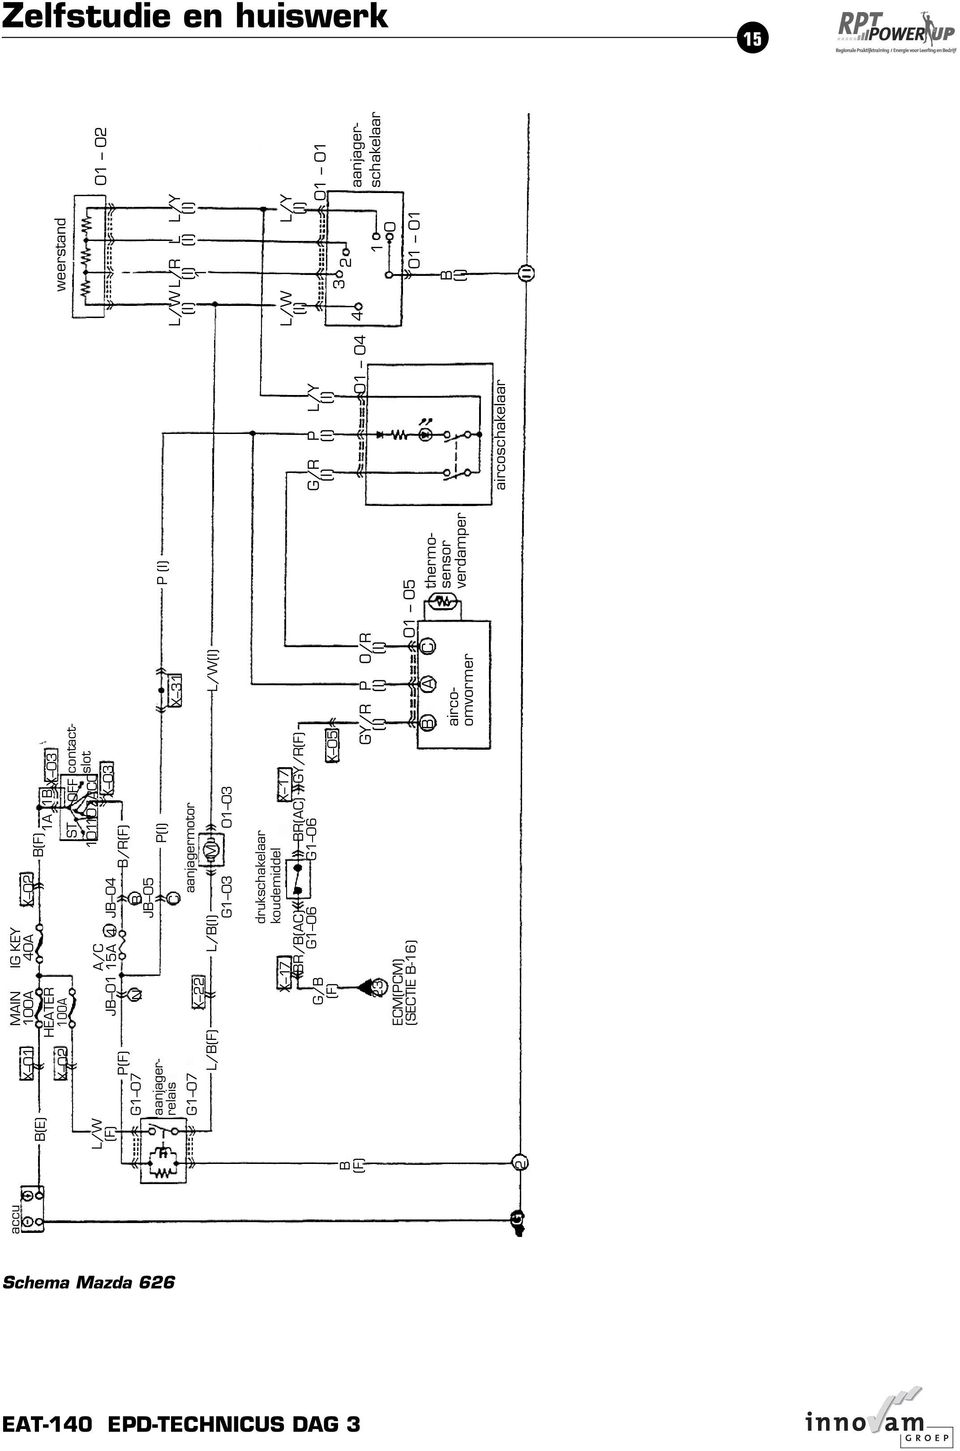 drukschakelaar koudemiddel X 17 X 17 BR/B(AC) BR(AC) GY/R(F) G1 06 G1 06 X 05 23 ECM(PCM) (SECTIE B-16) GY/R P B A C O/R 01 05 thermosensor